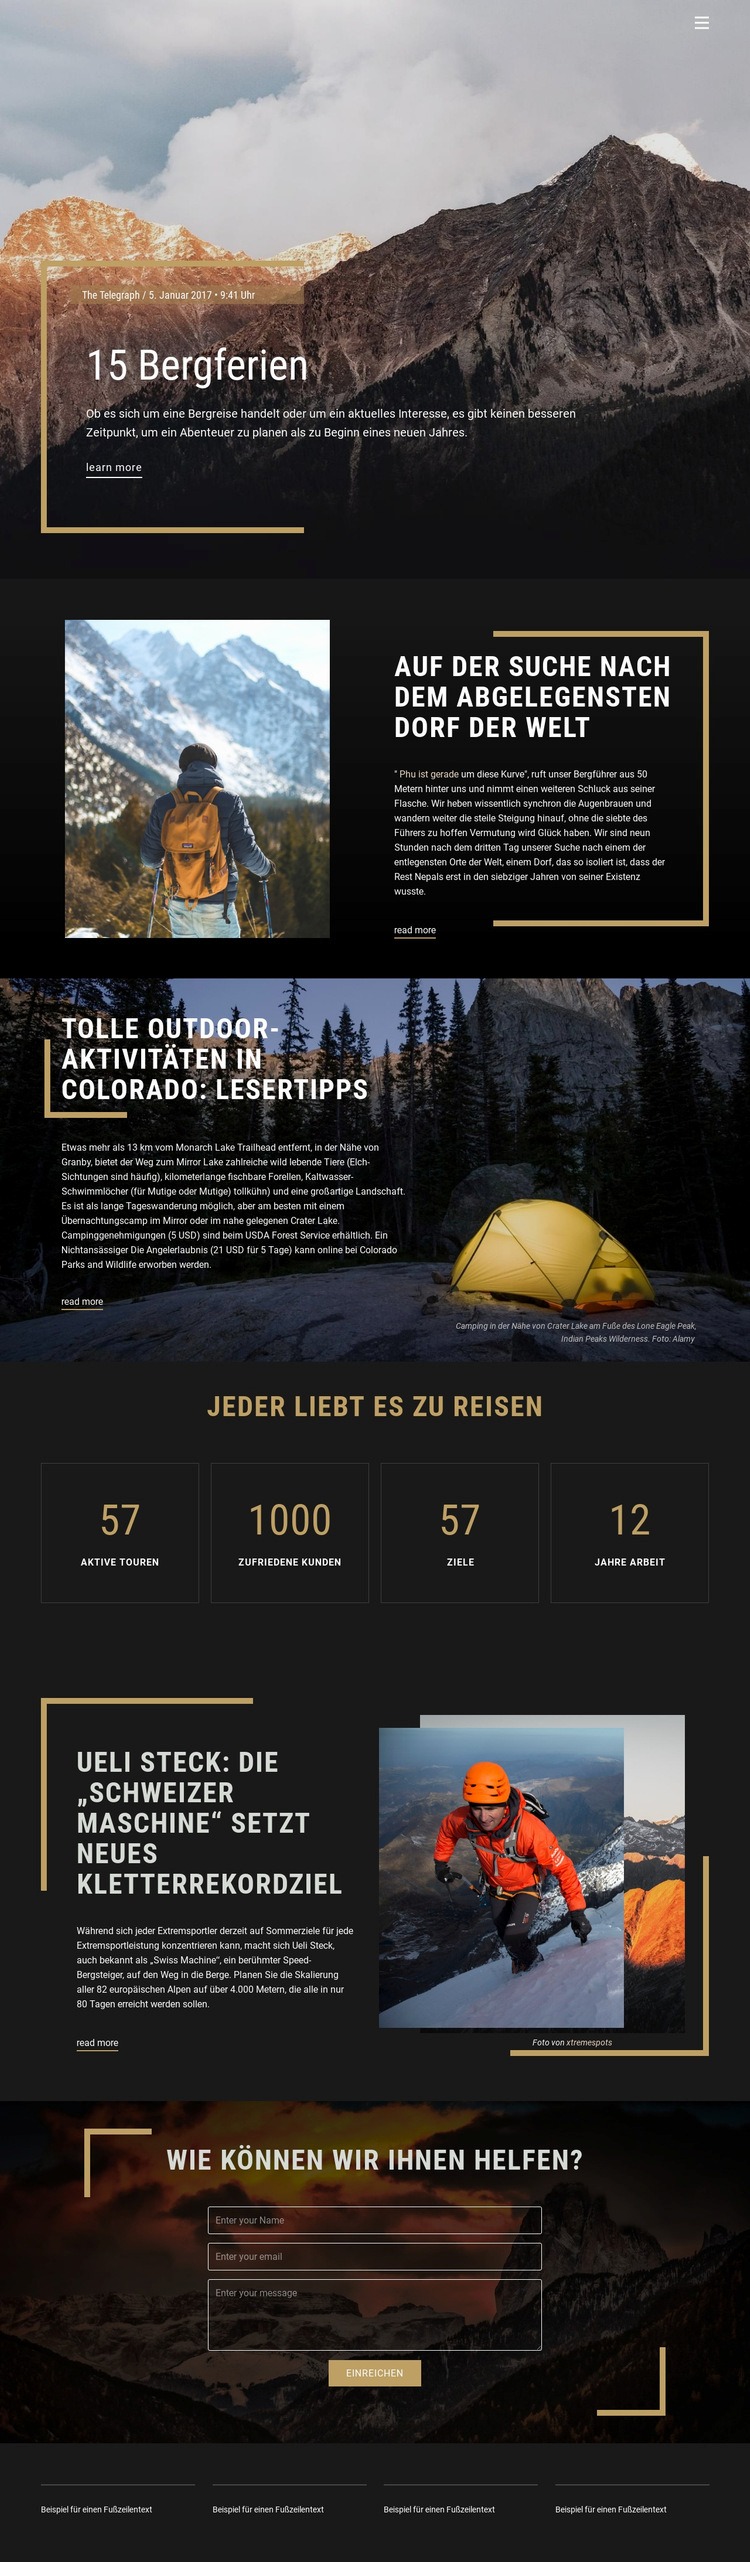 Bergferien Website design